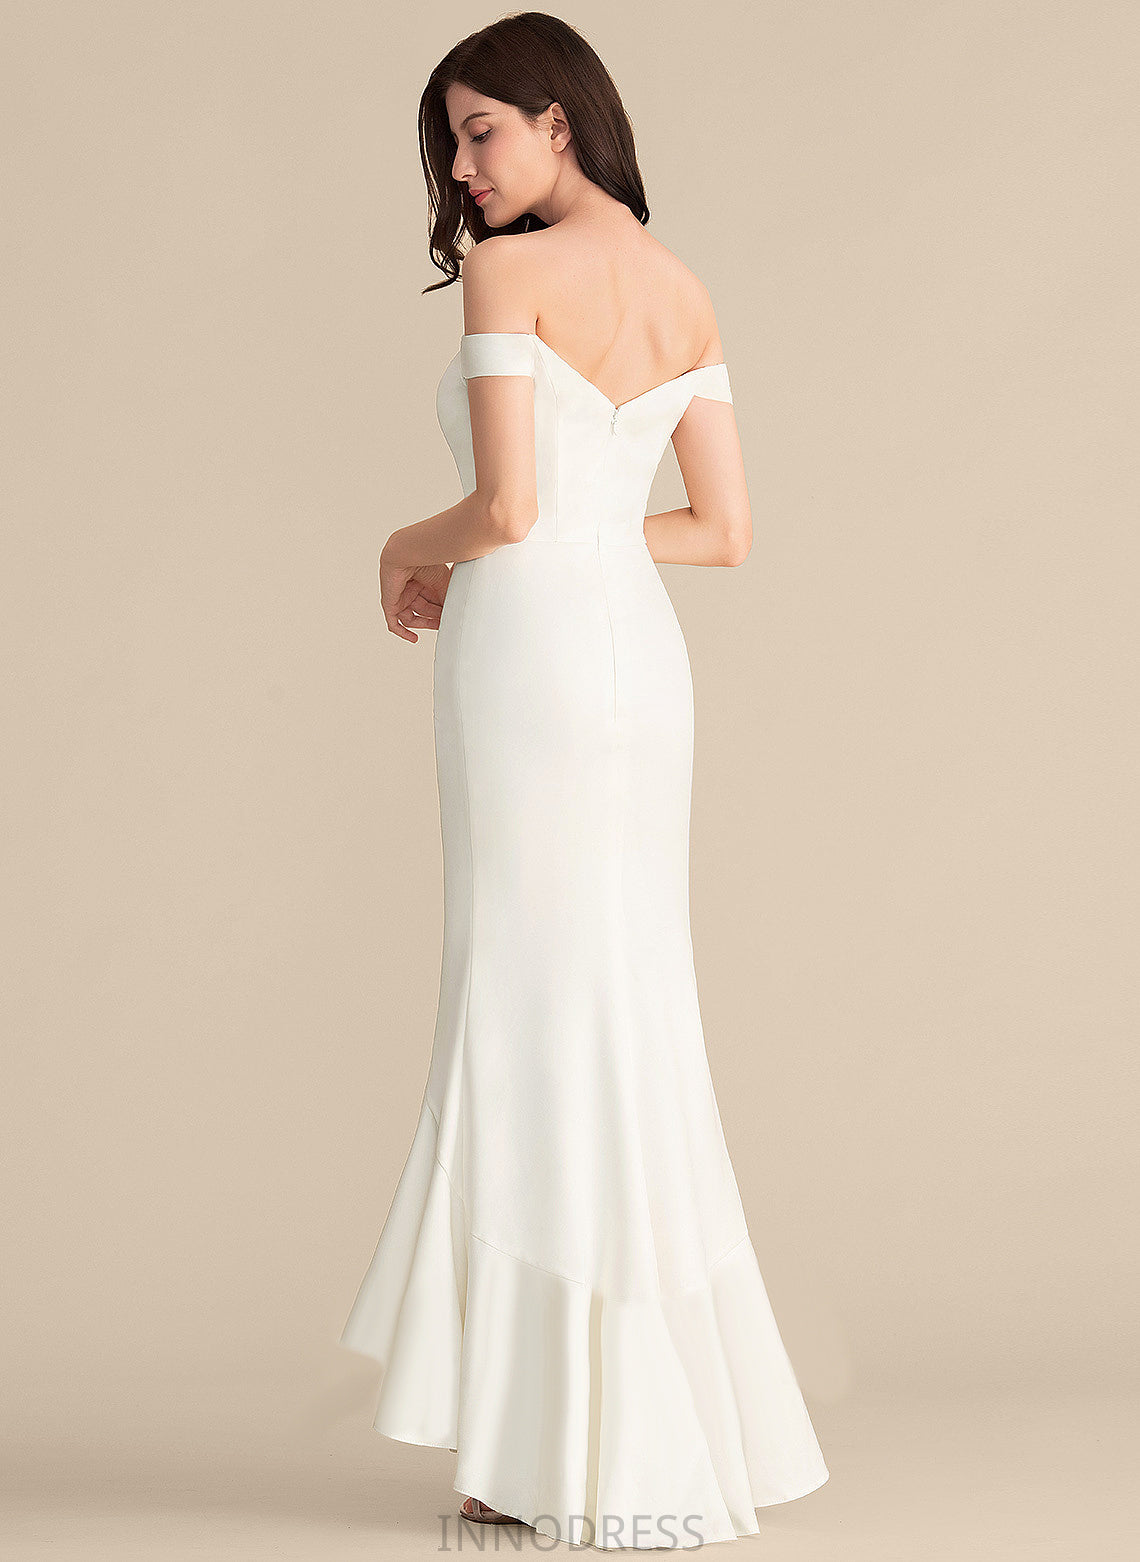 With Dress Ruffles Trumpet/Mermaid Asymmetrical Cascading Wedding Anabel Off-the-Shoulder Wedding Dresses